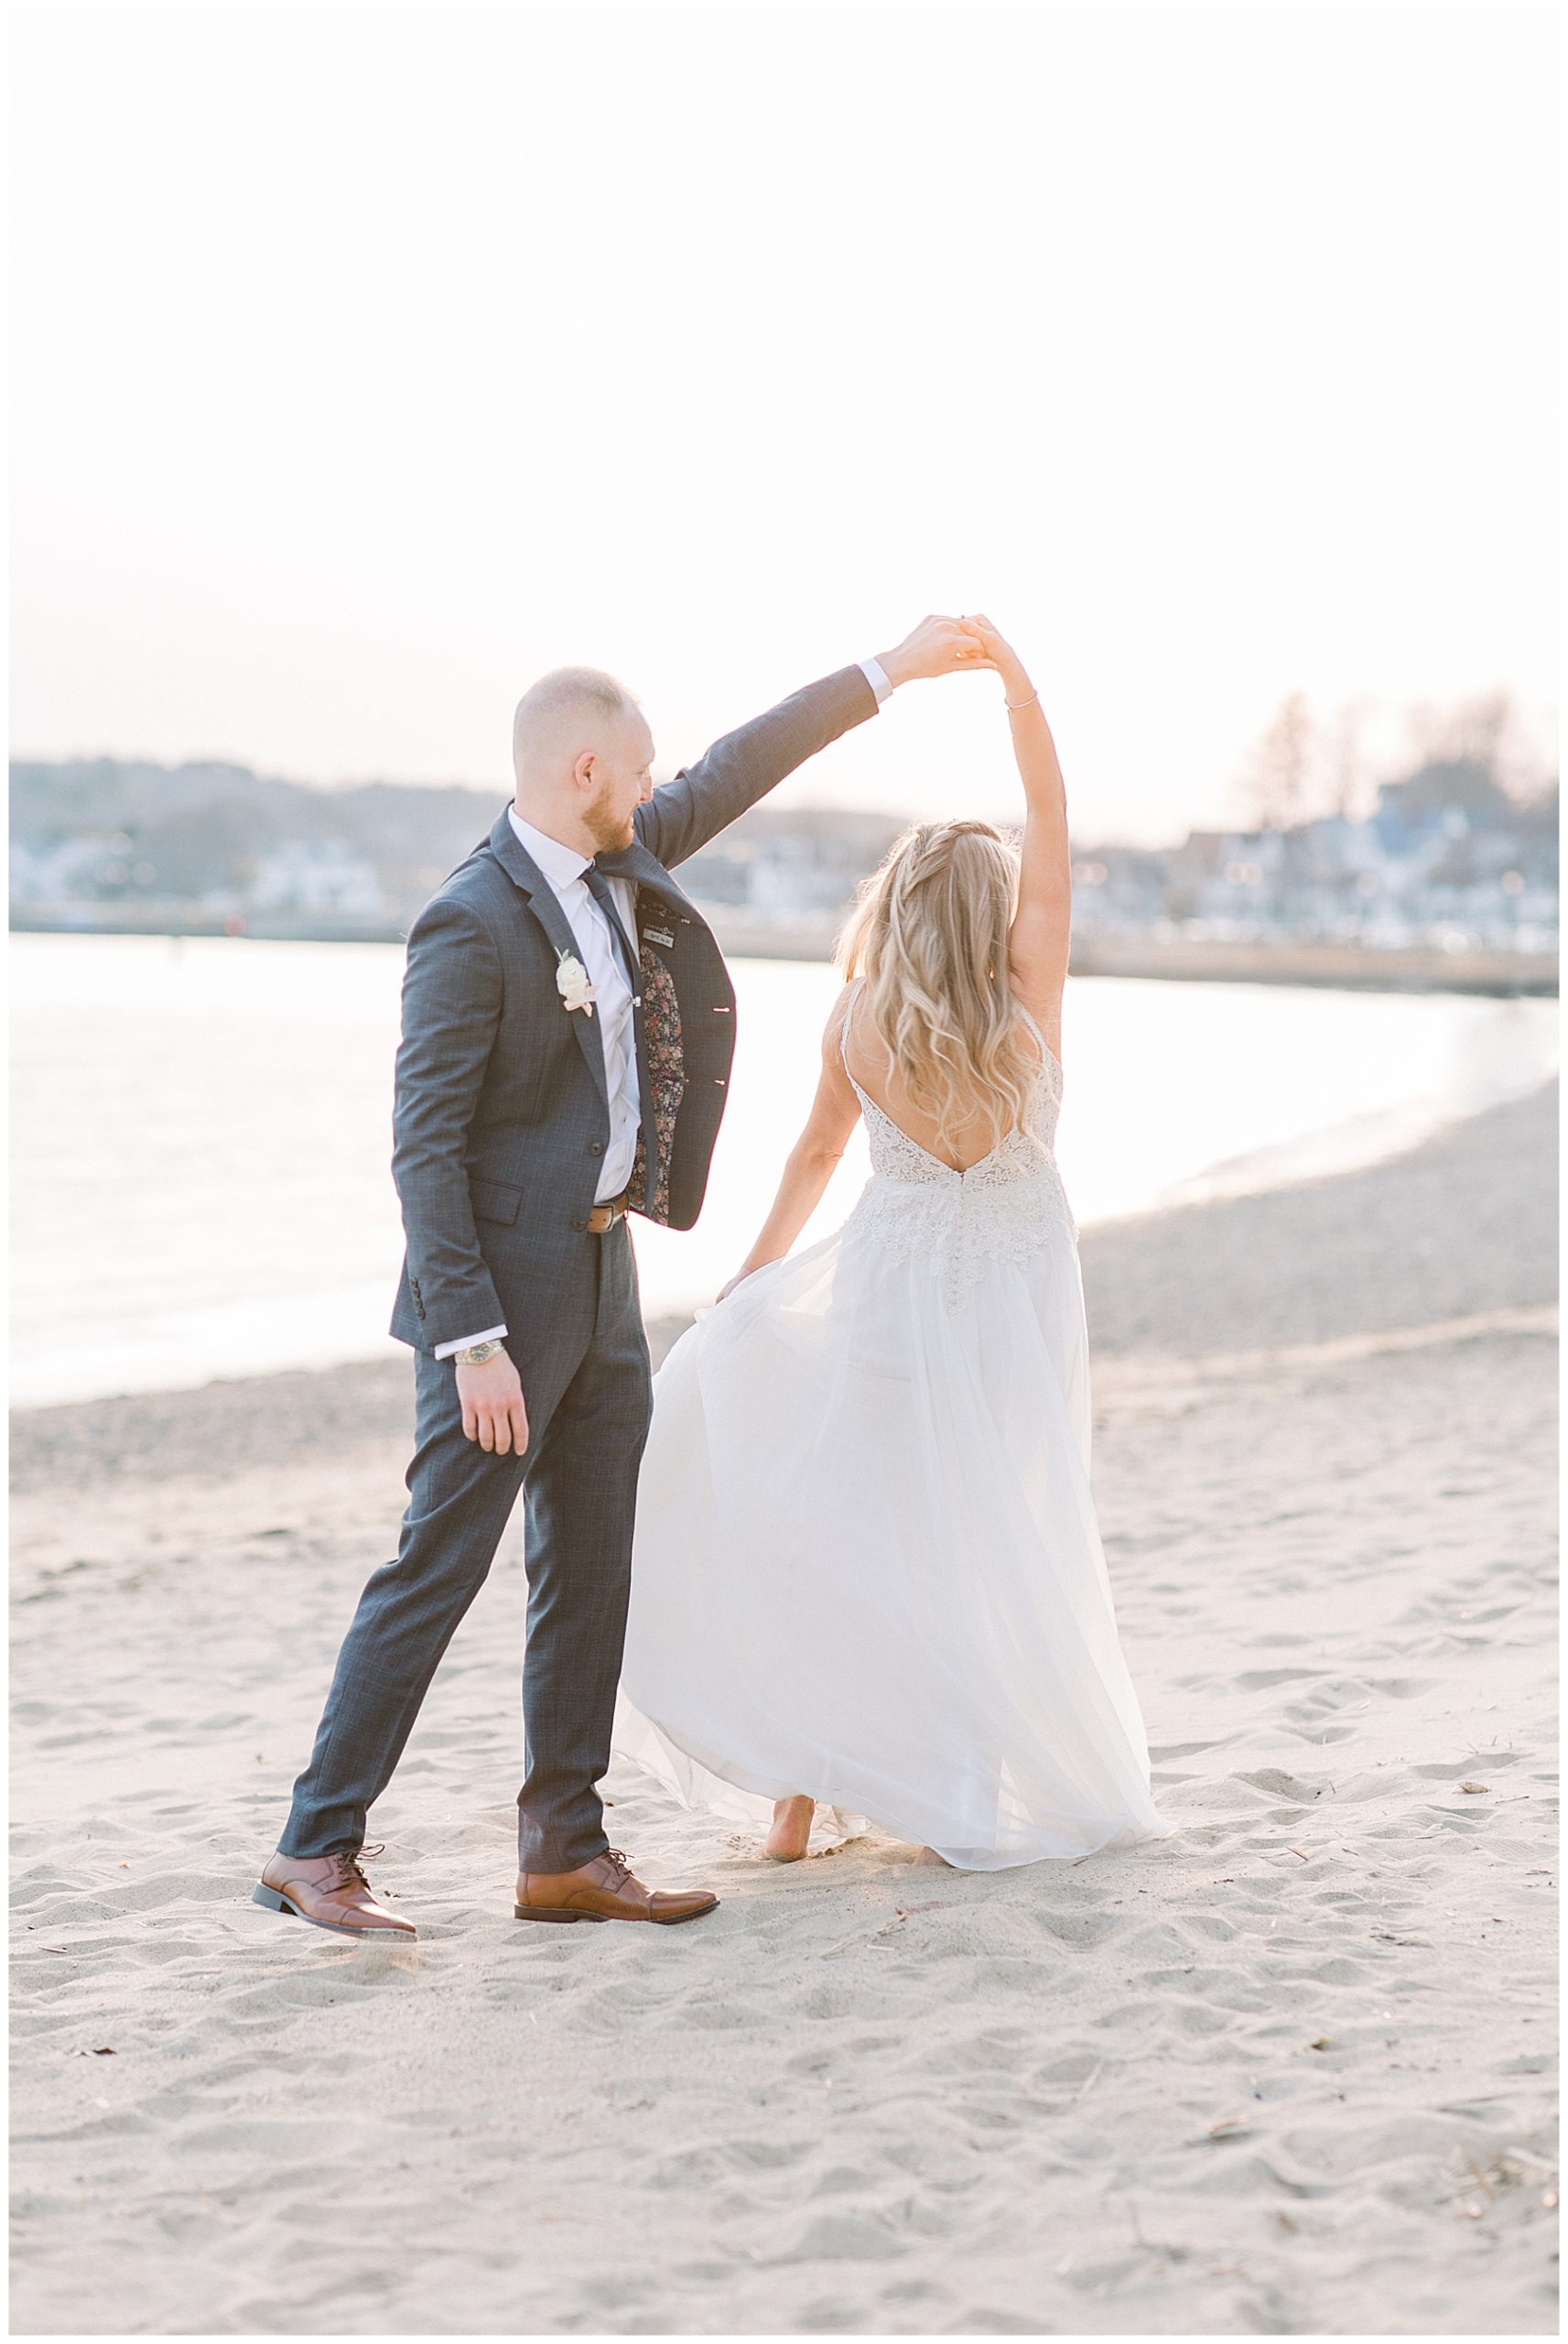 groom twirls bride during photos on beach